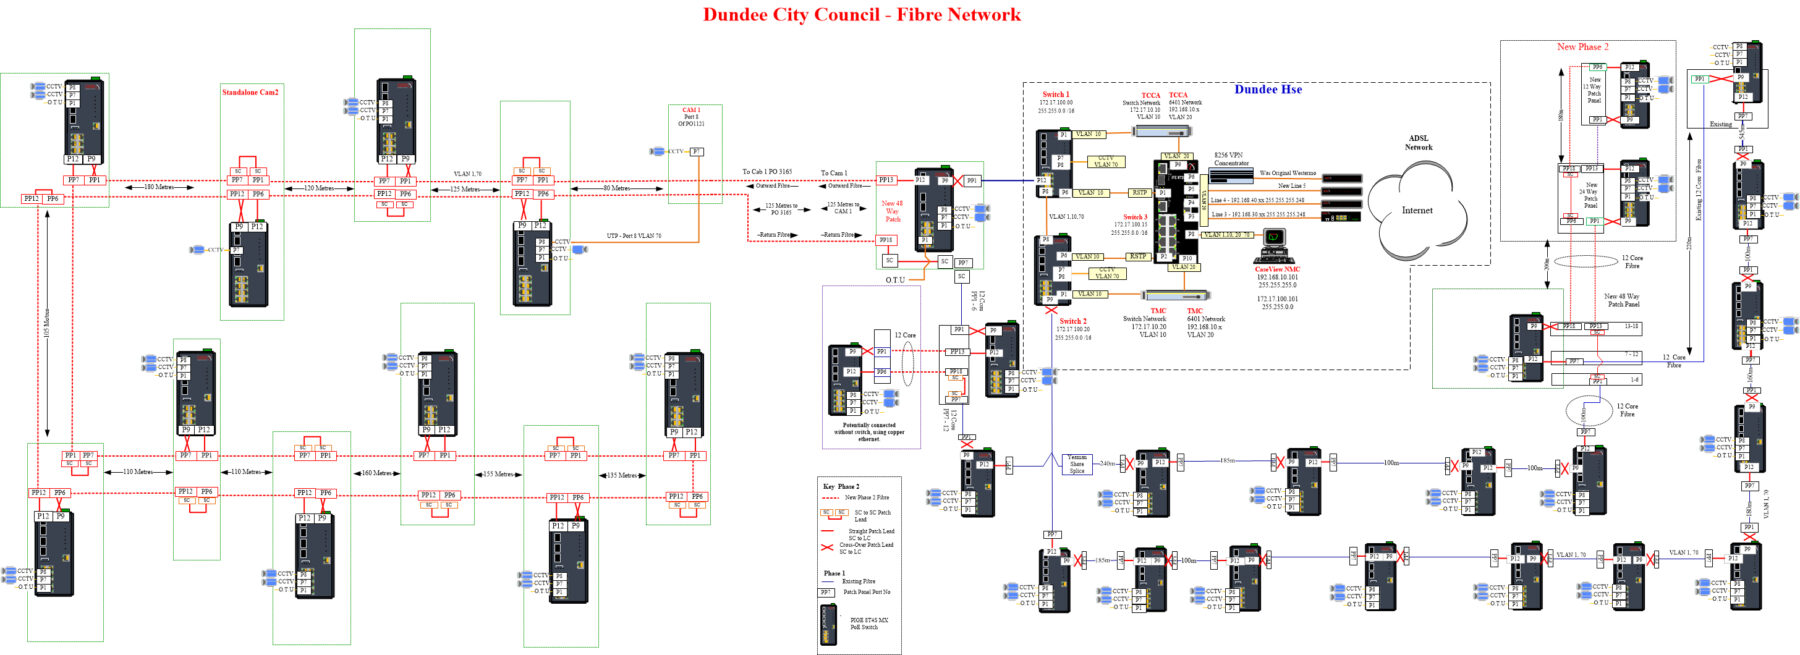 Dundee Smart City Network